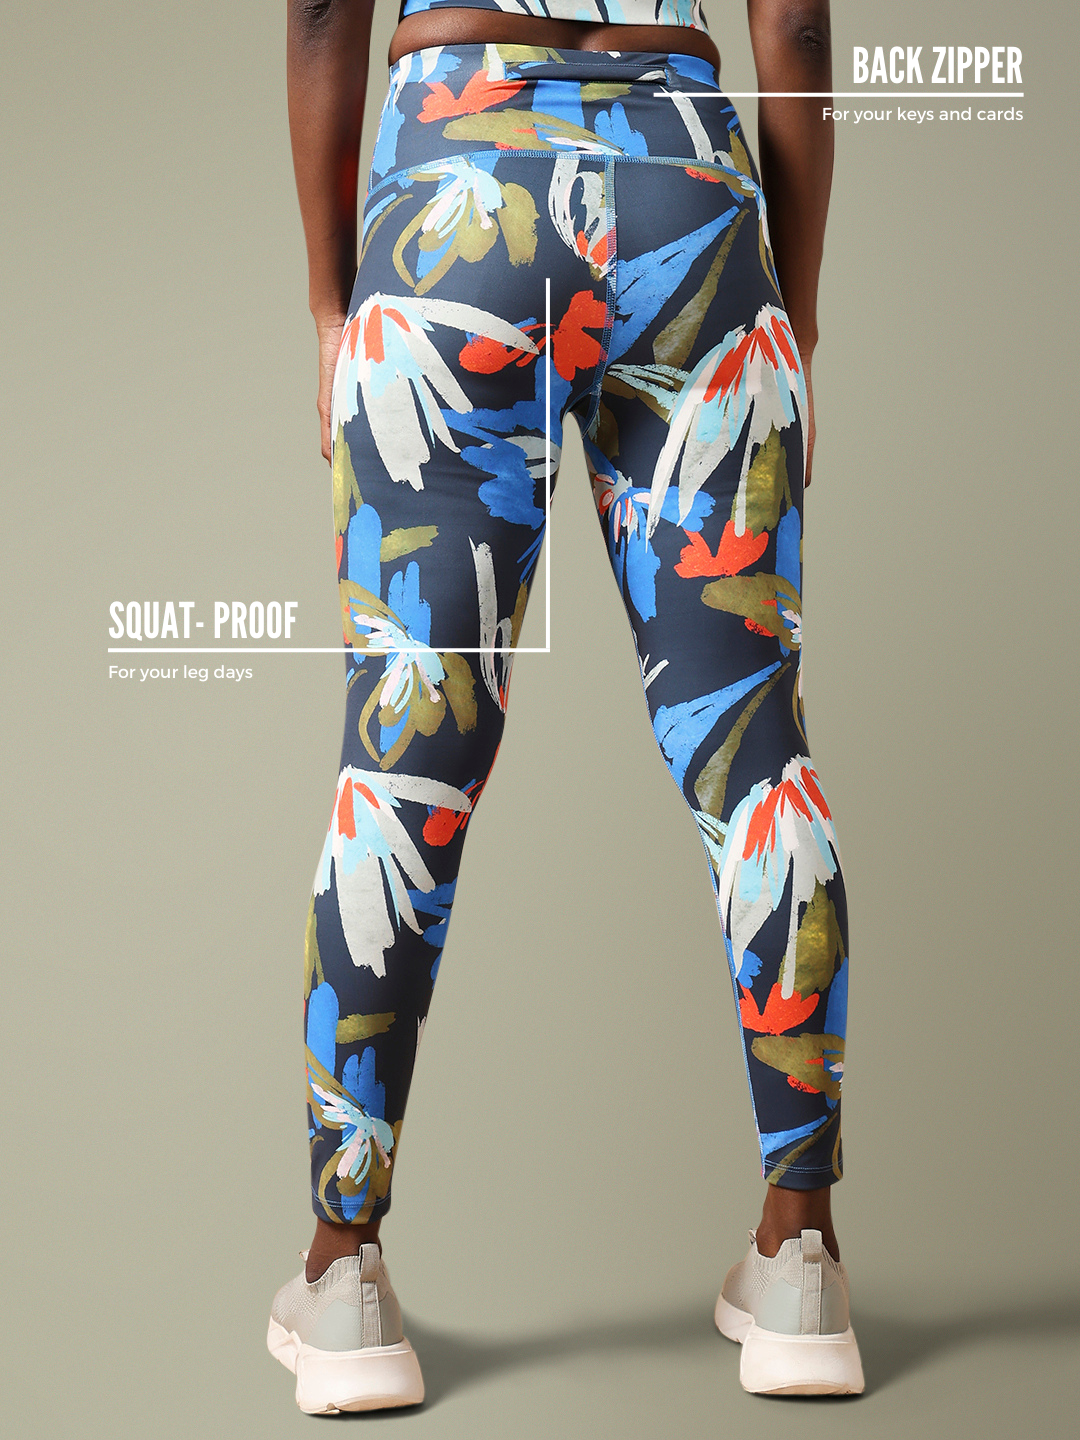 Jockey Women's Slim Fit Leggings MW21 – Online Shopping site in India